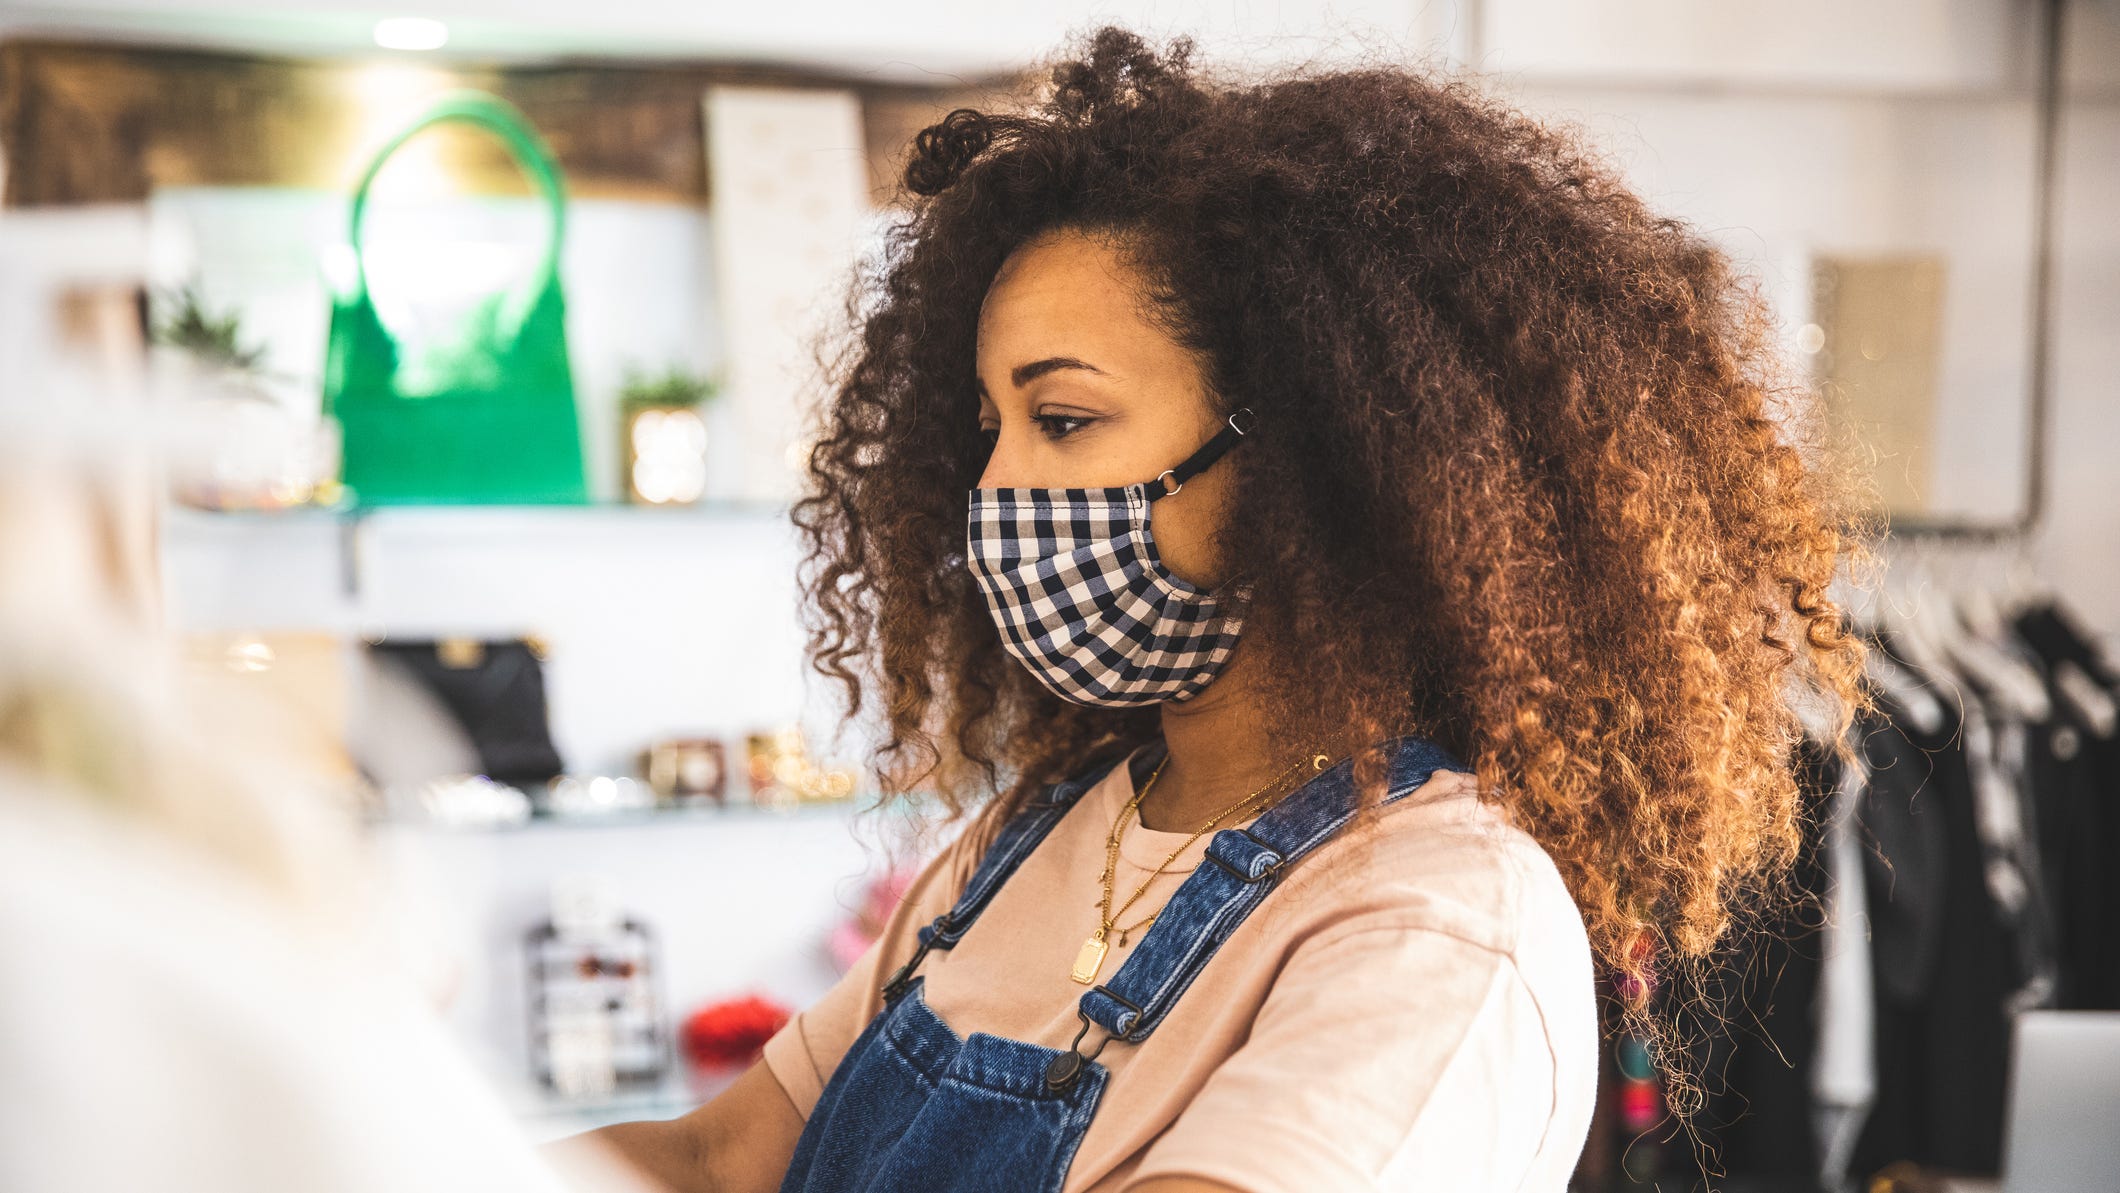 Face mask mandate Sales rebound after CDC mask guidelines update